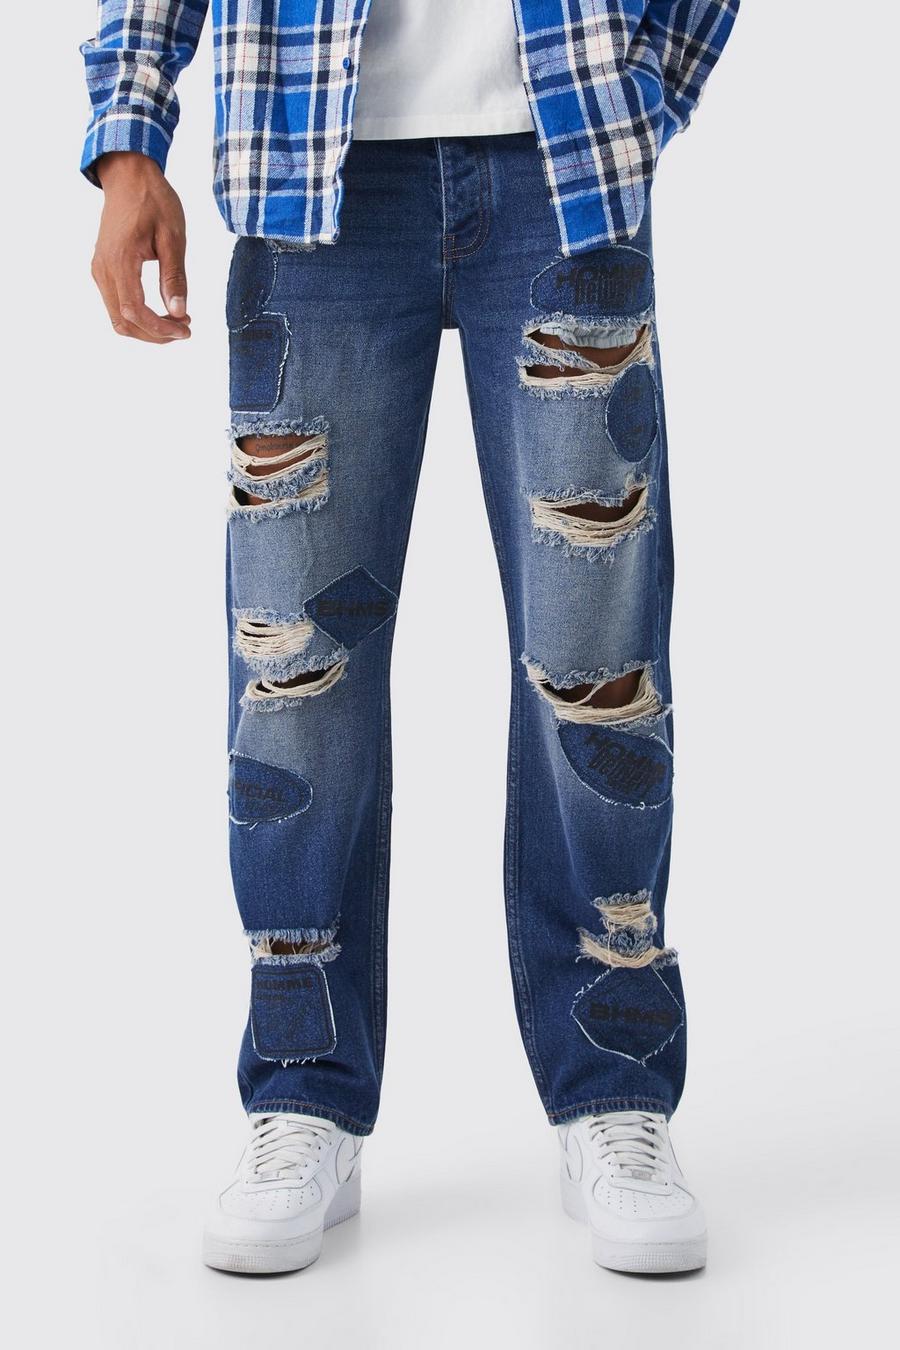 Tall lockere zerrissene Jeans mit Applikation, Antique blue